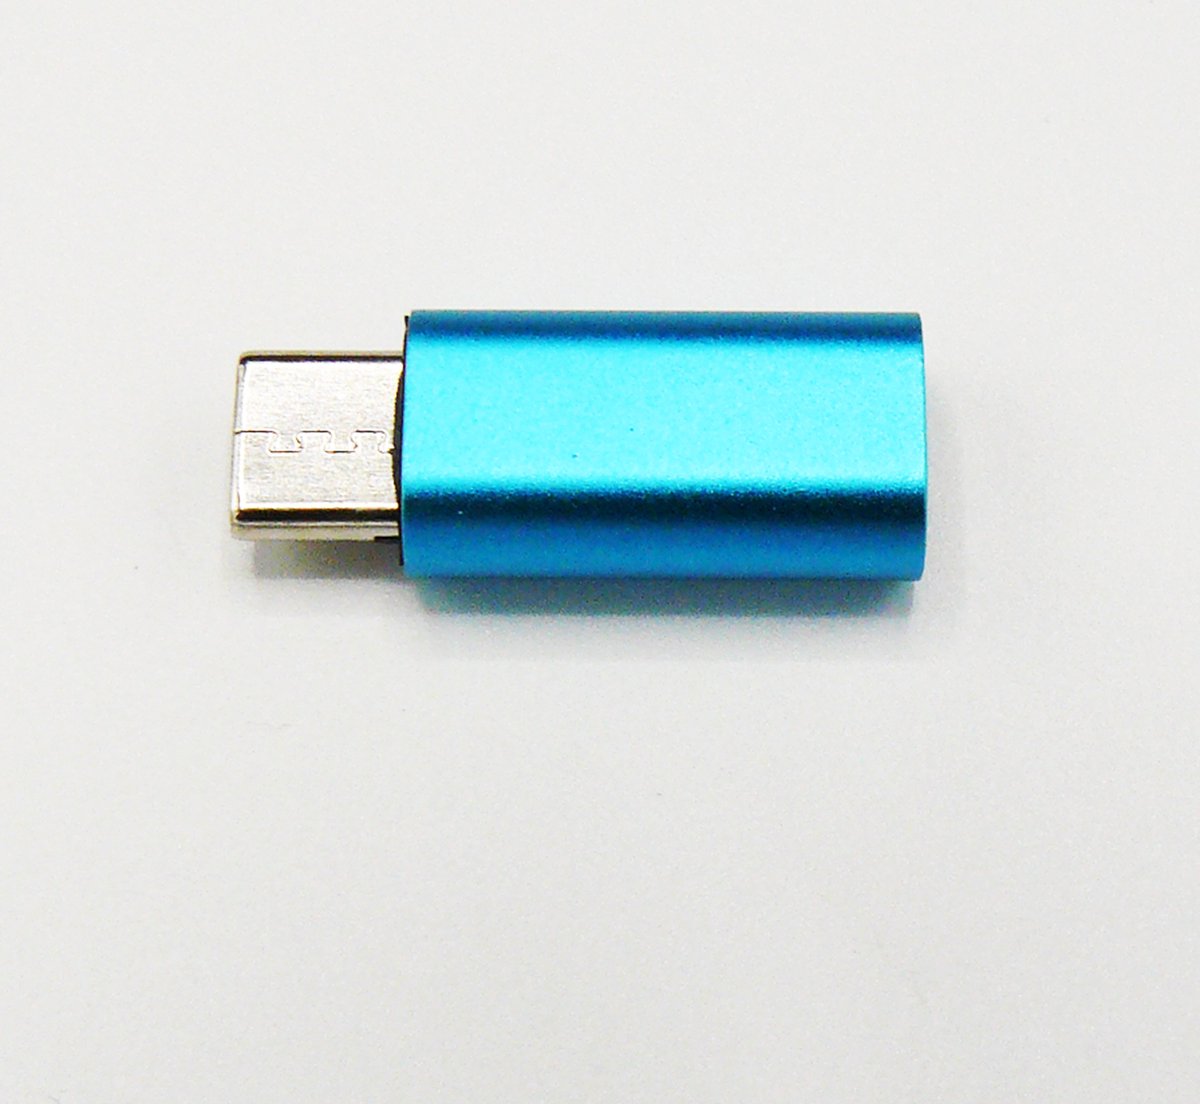 8 Pin Lightning Female naar Type C Male USB Adapter - Blauw